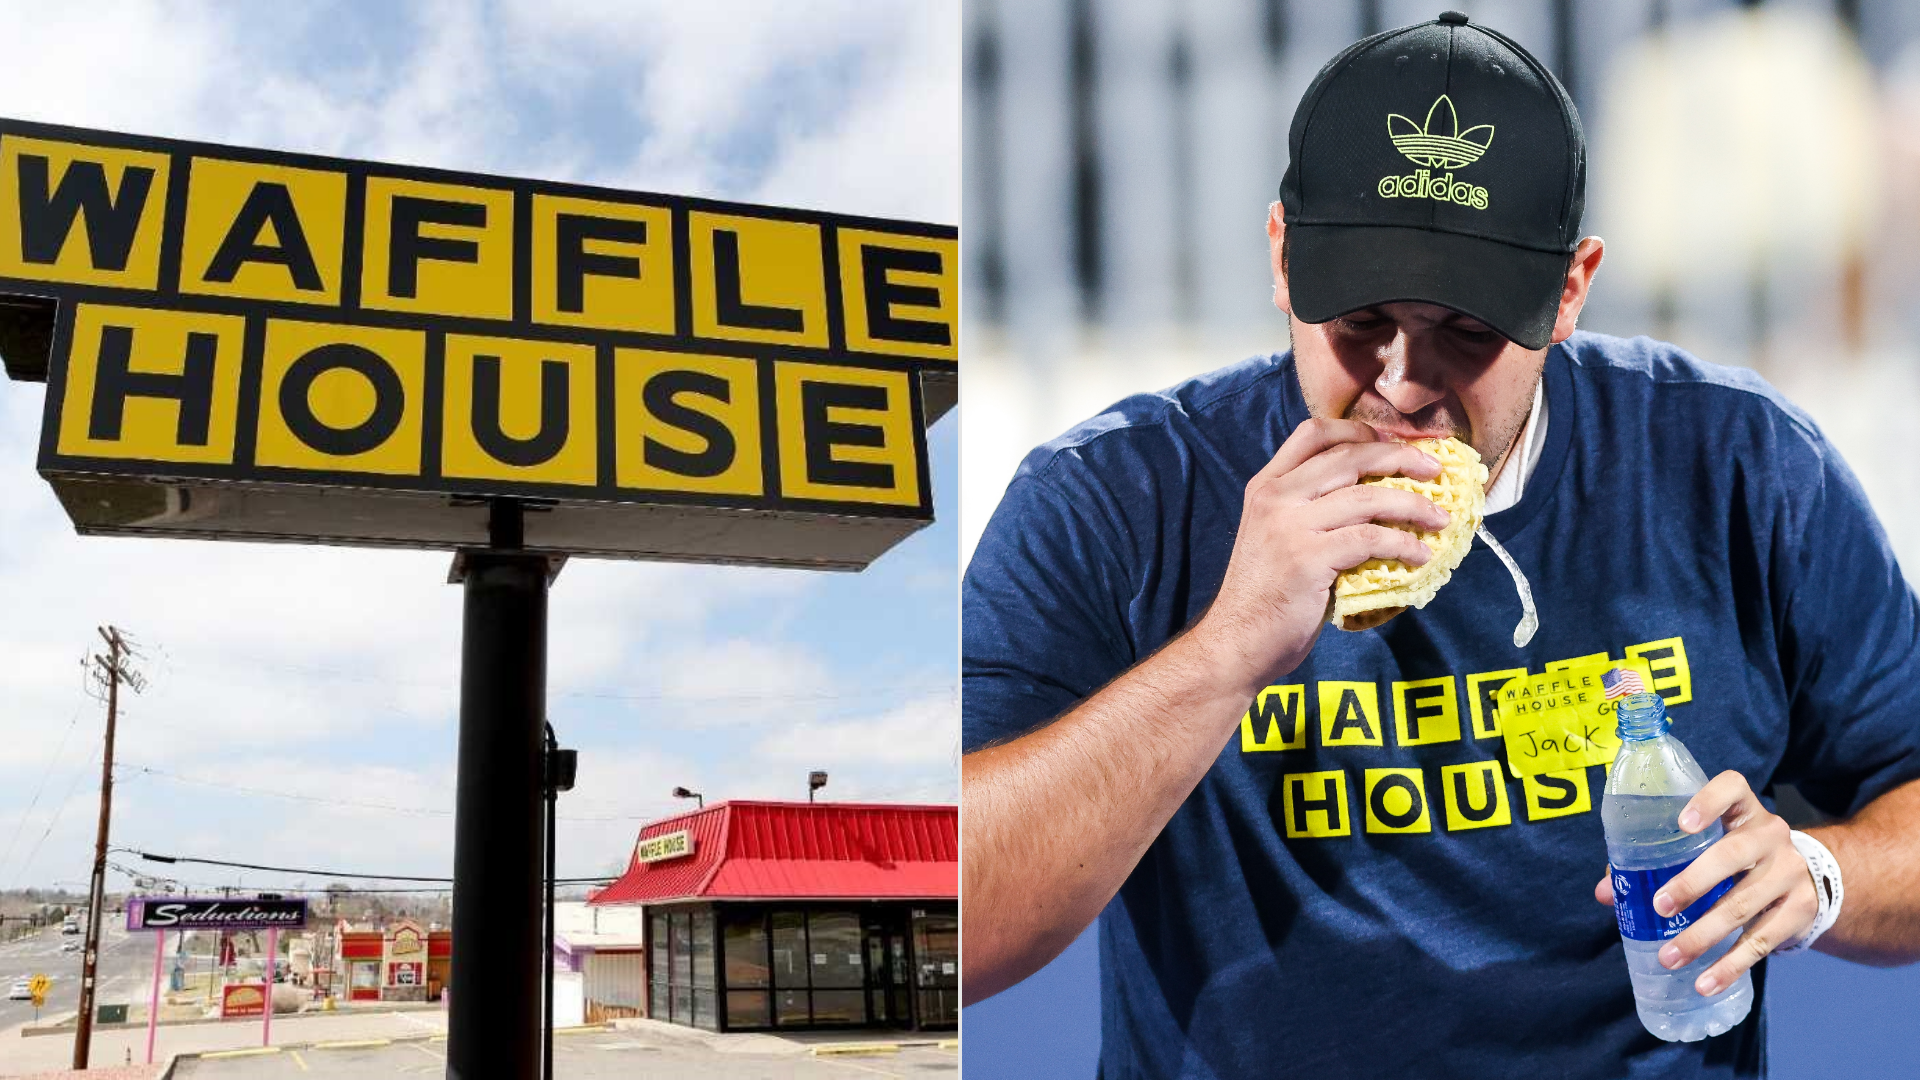 5. The Waffle House Challenge: